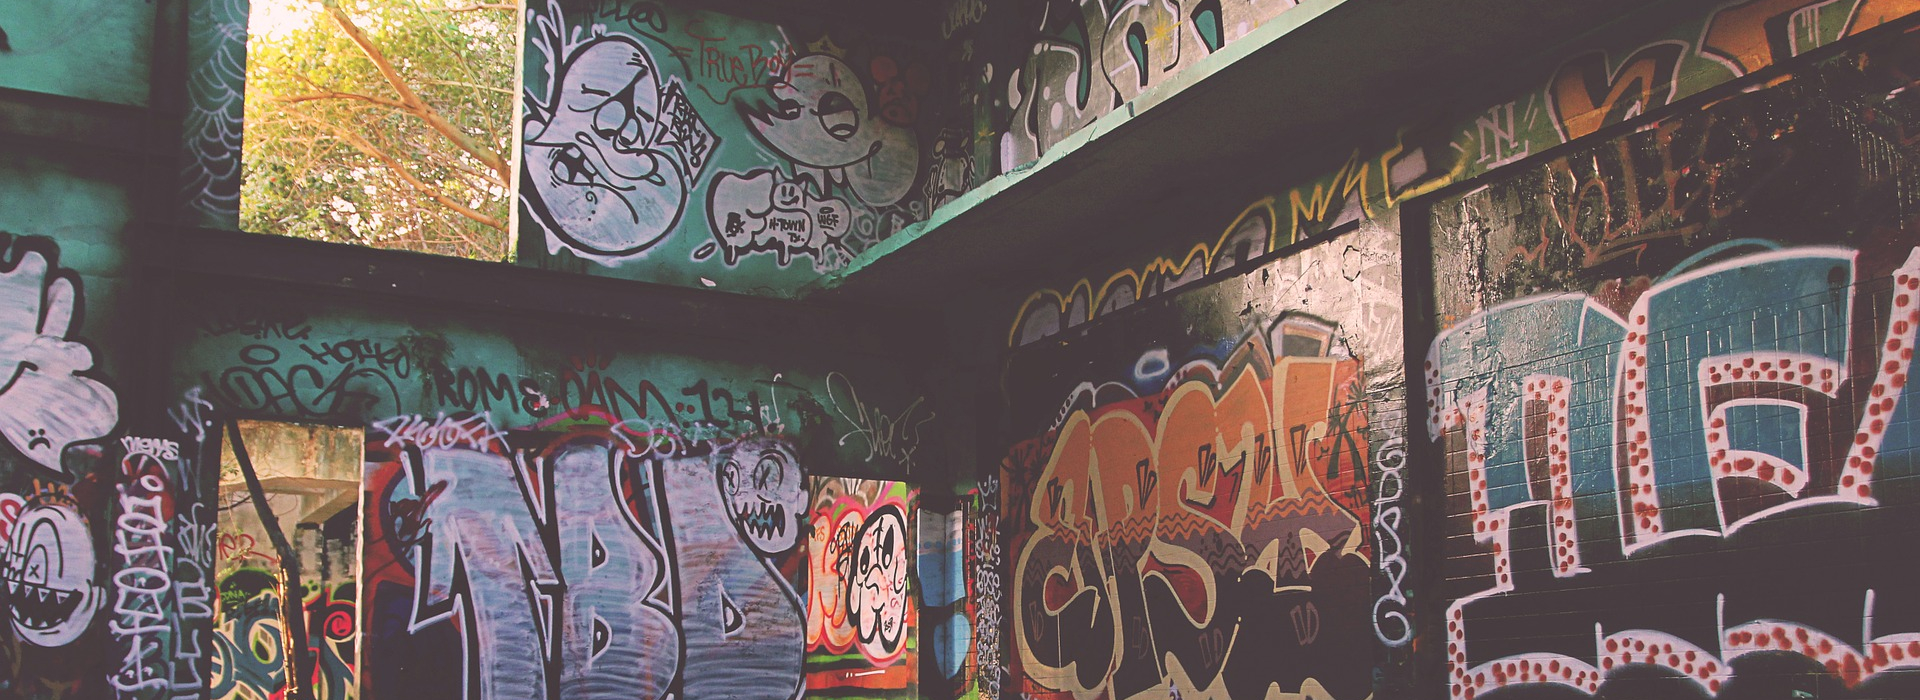 graffiti backdrops